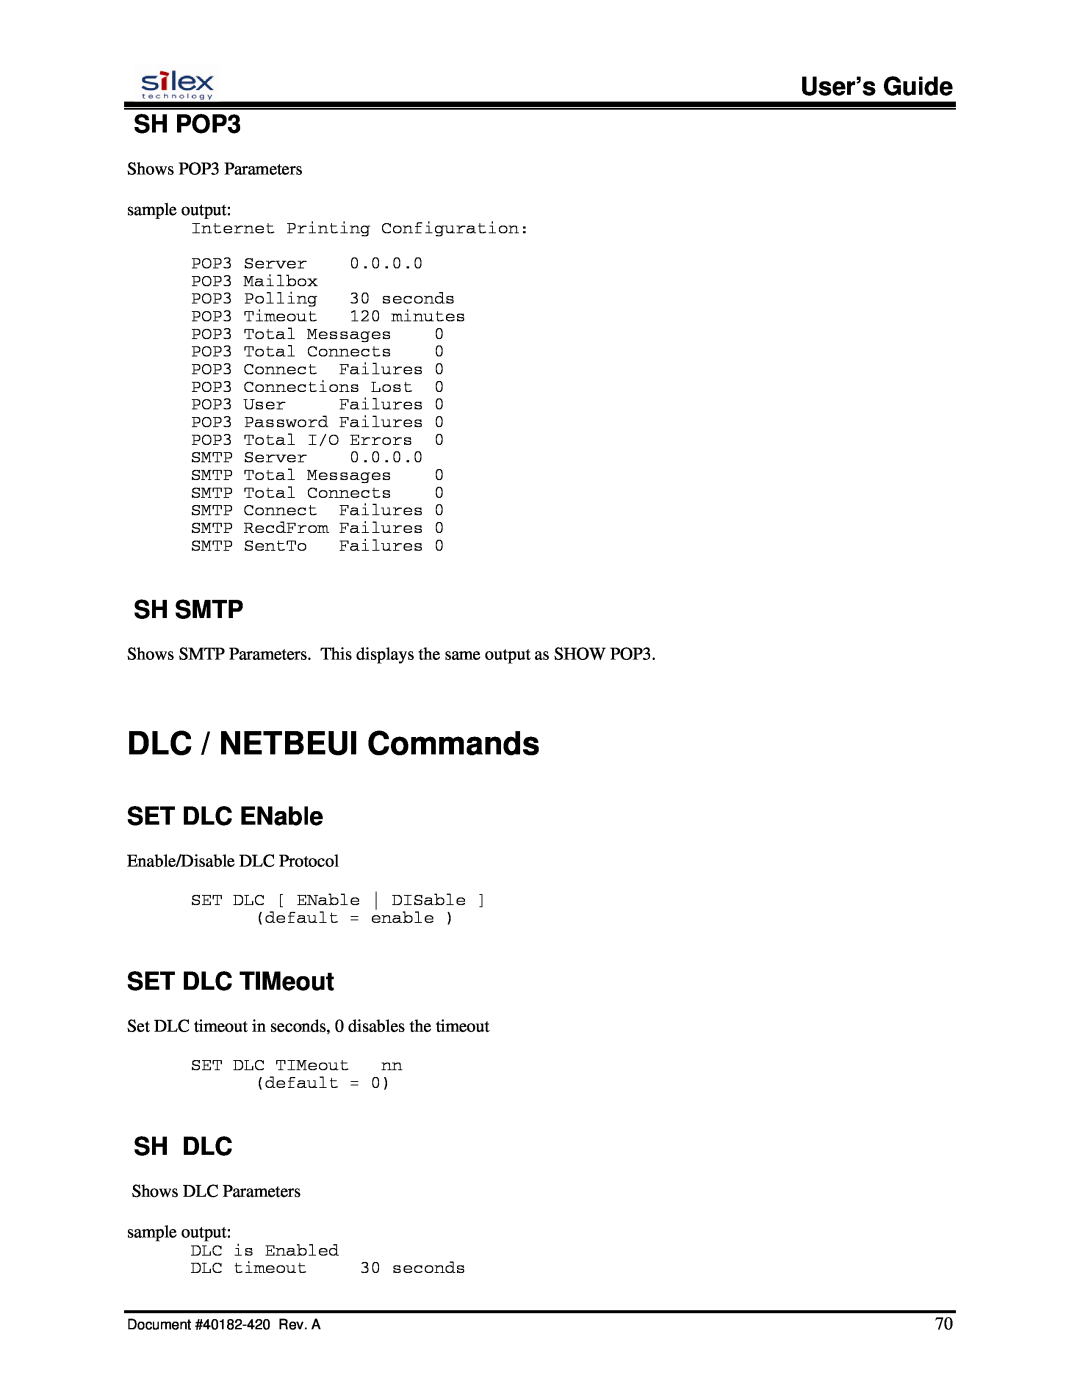 Silex technology SX-200 DLC / NETBEUI Commands, User’s Guide SH POP3, Sh Smtp, SET DLC ENable, SET DLC TIMeout, Sh Dlc 